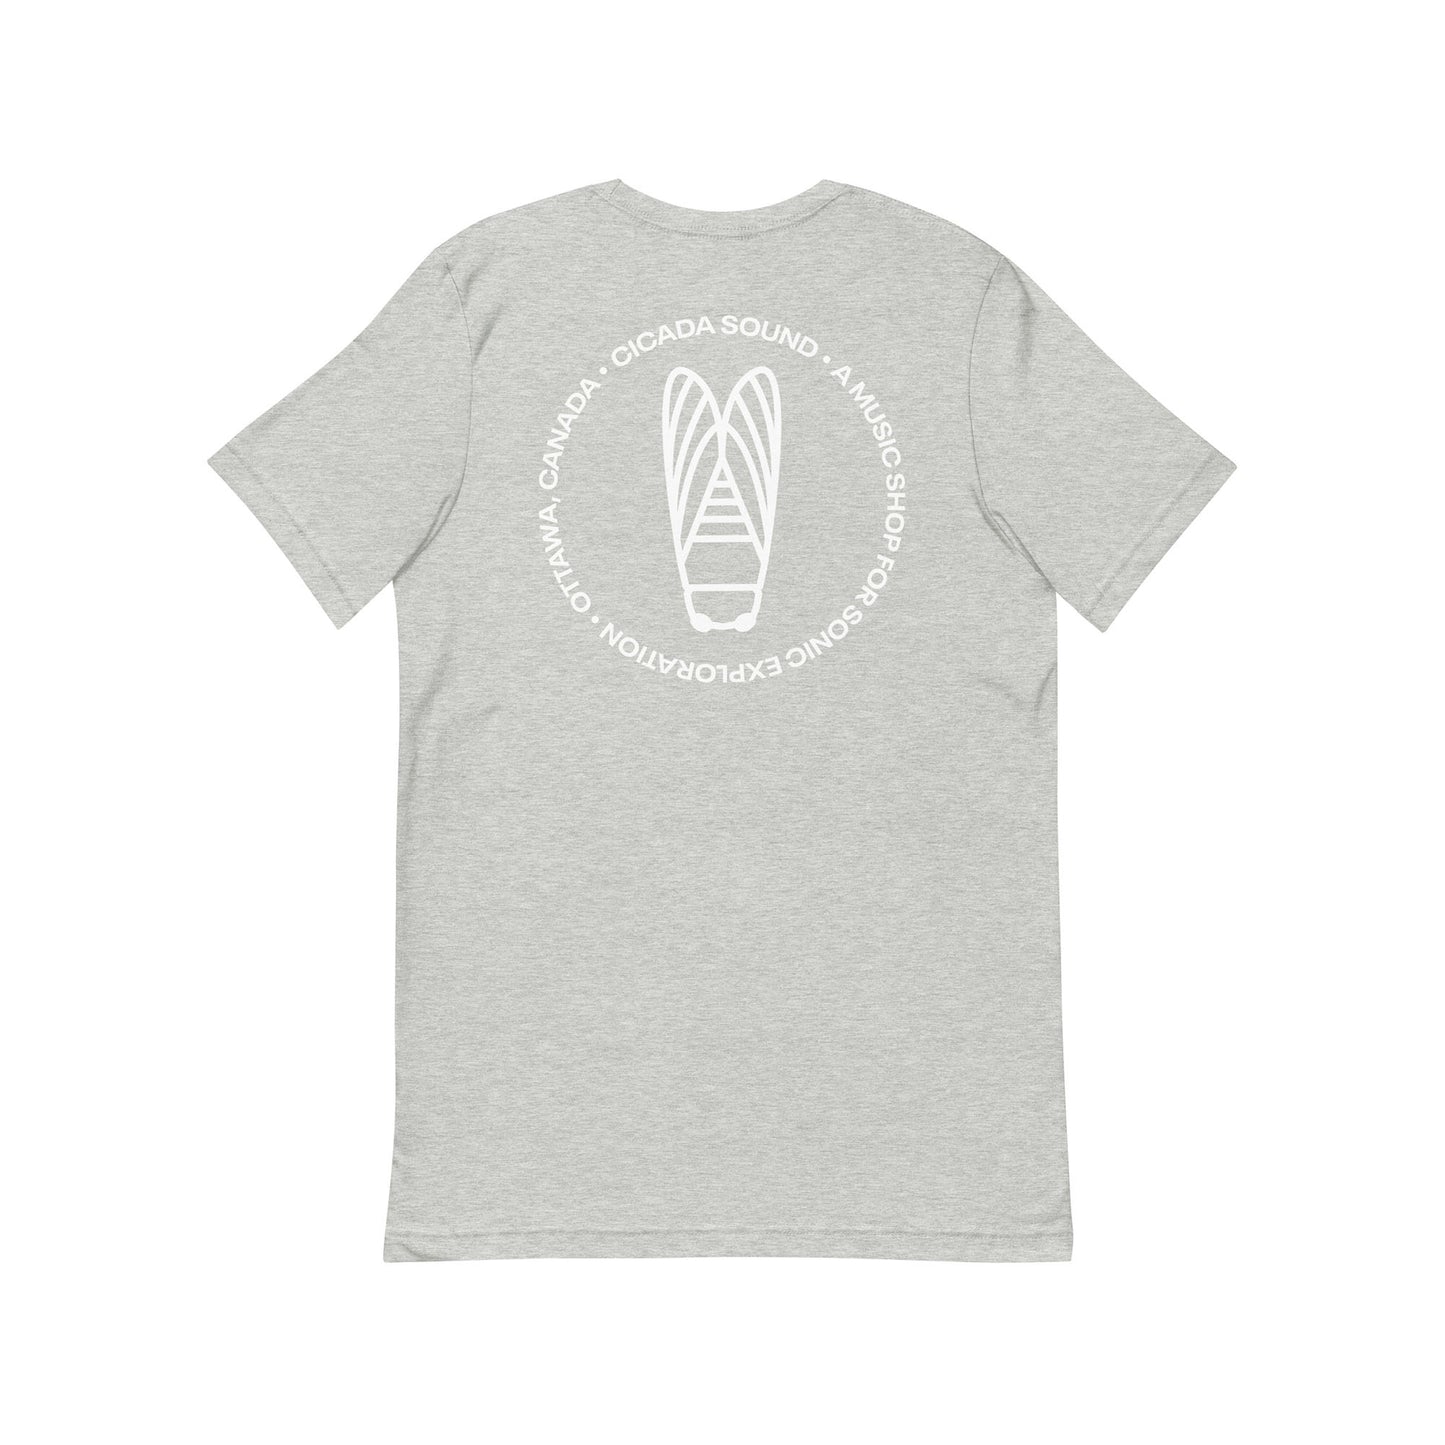 Cicada Sound Standard T-Shirt